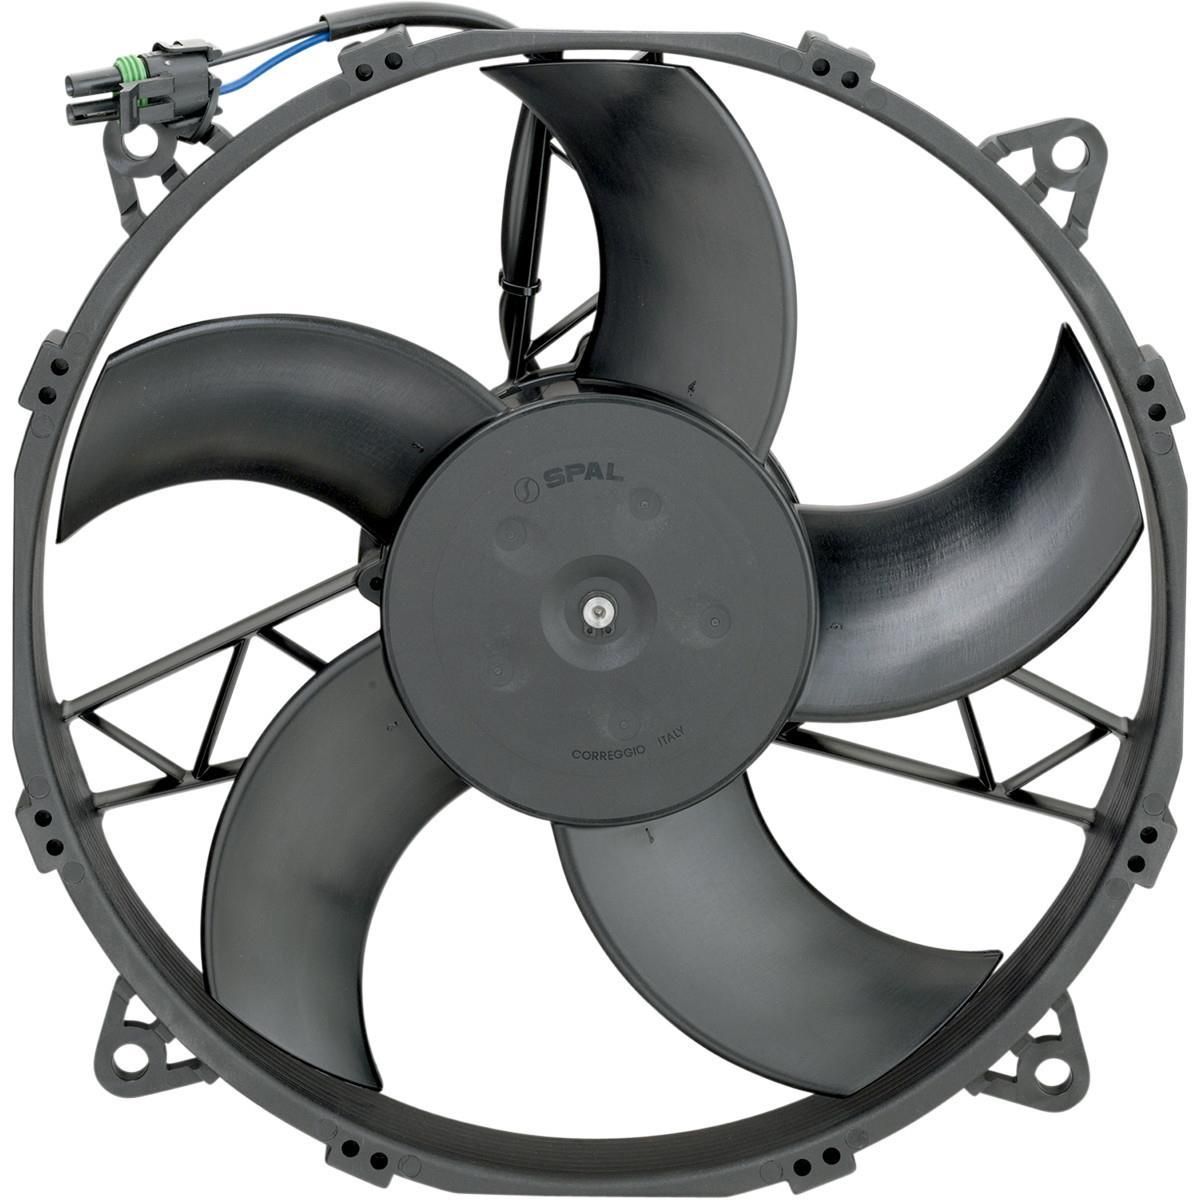 224P-MOOSE-UTILI-19010328 Hi-Performance Cooling Fan